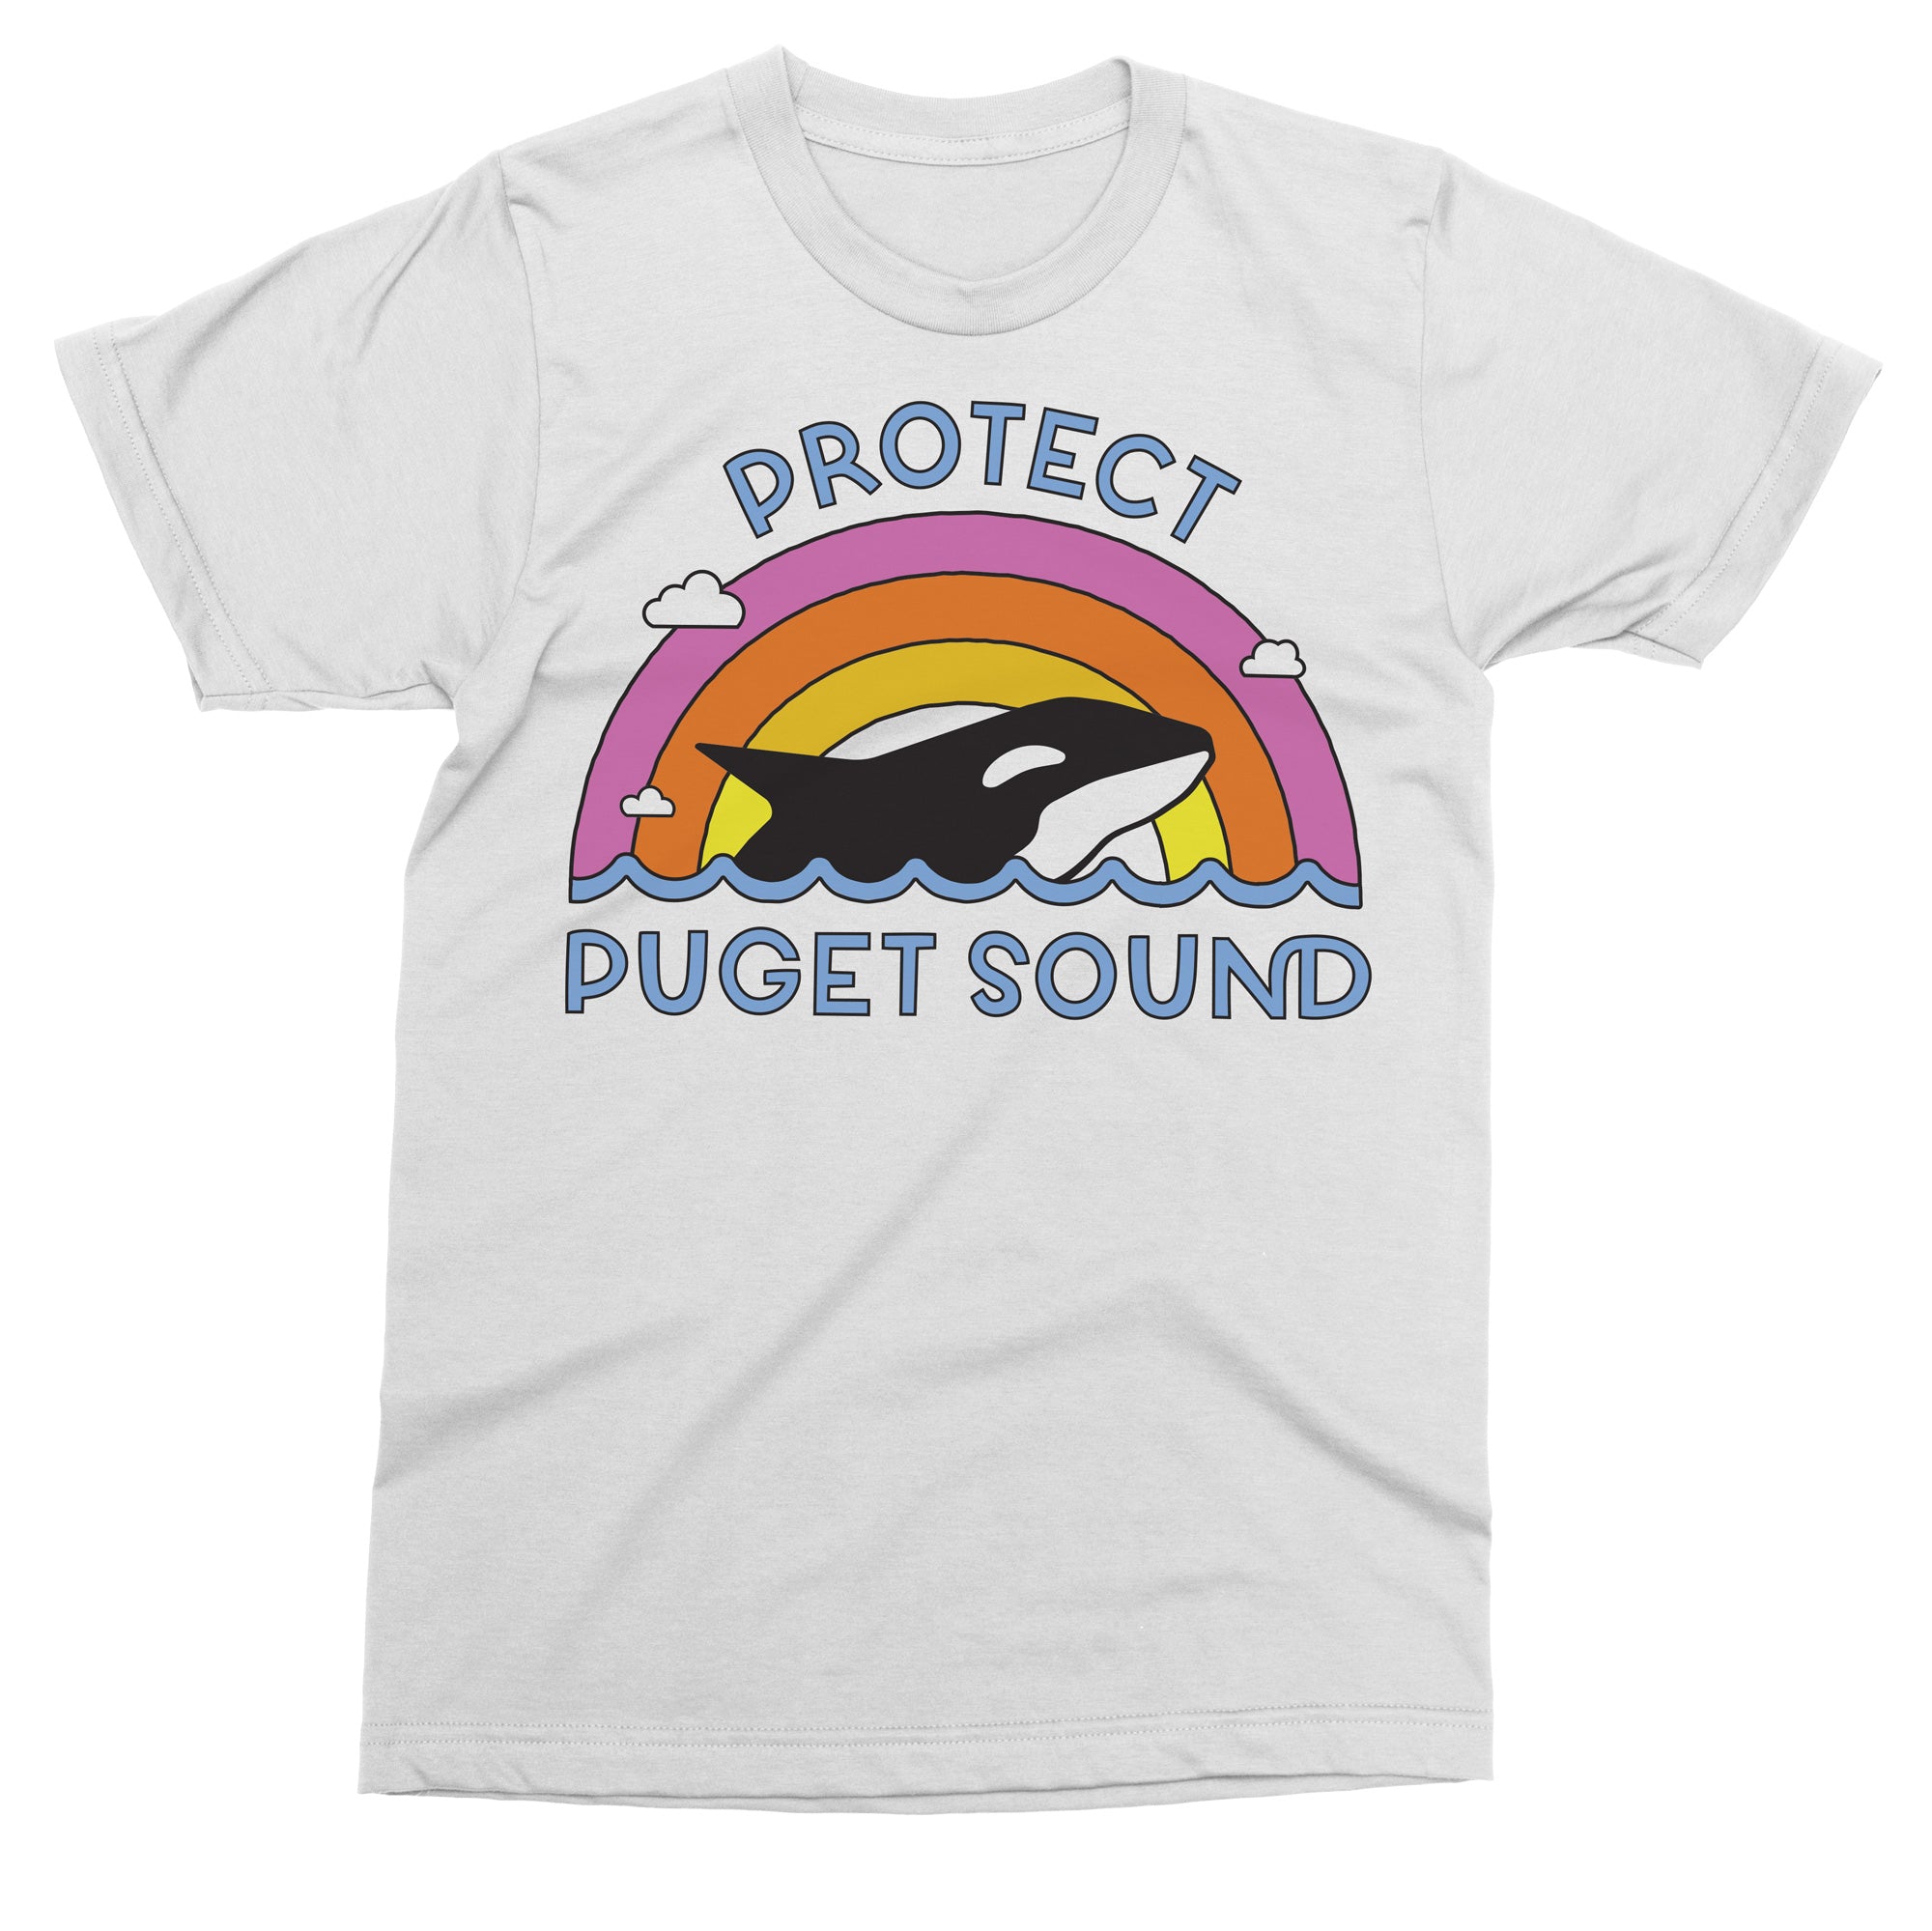 Protect Puget Sound tshirt - Viaduct